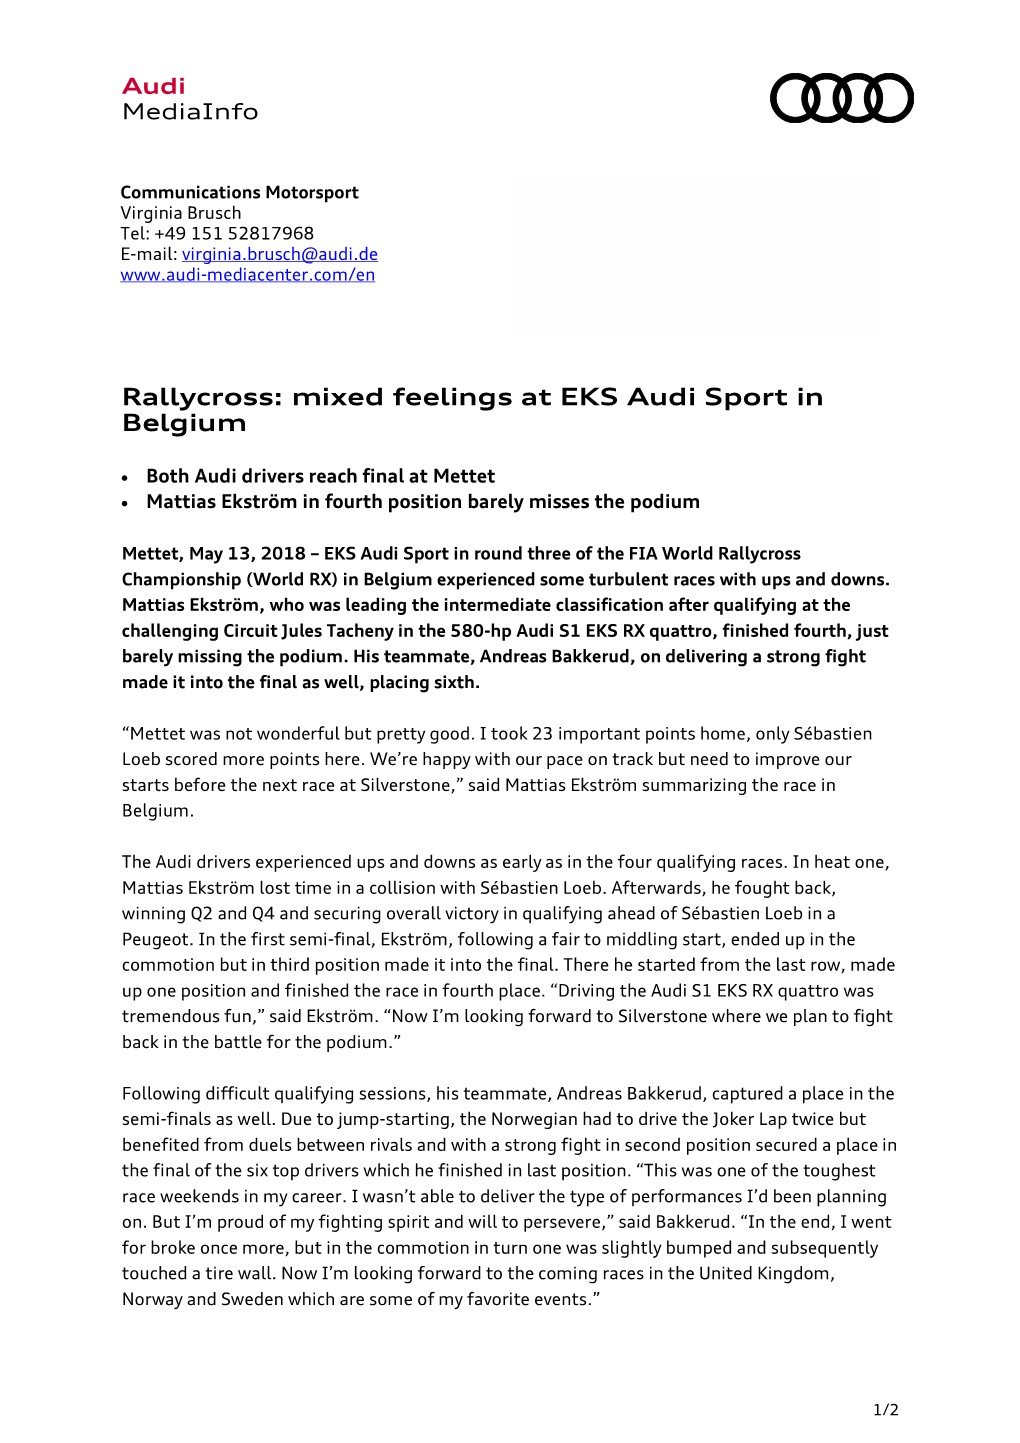 Rallycross: Mixed Feelings at EKS Audi Sport in Belgium